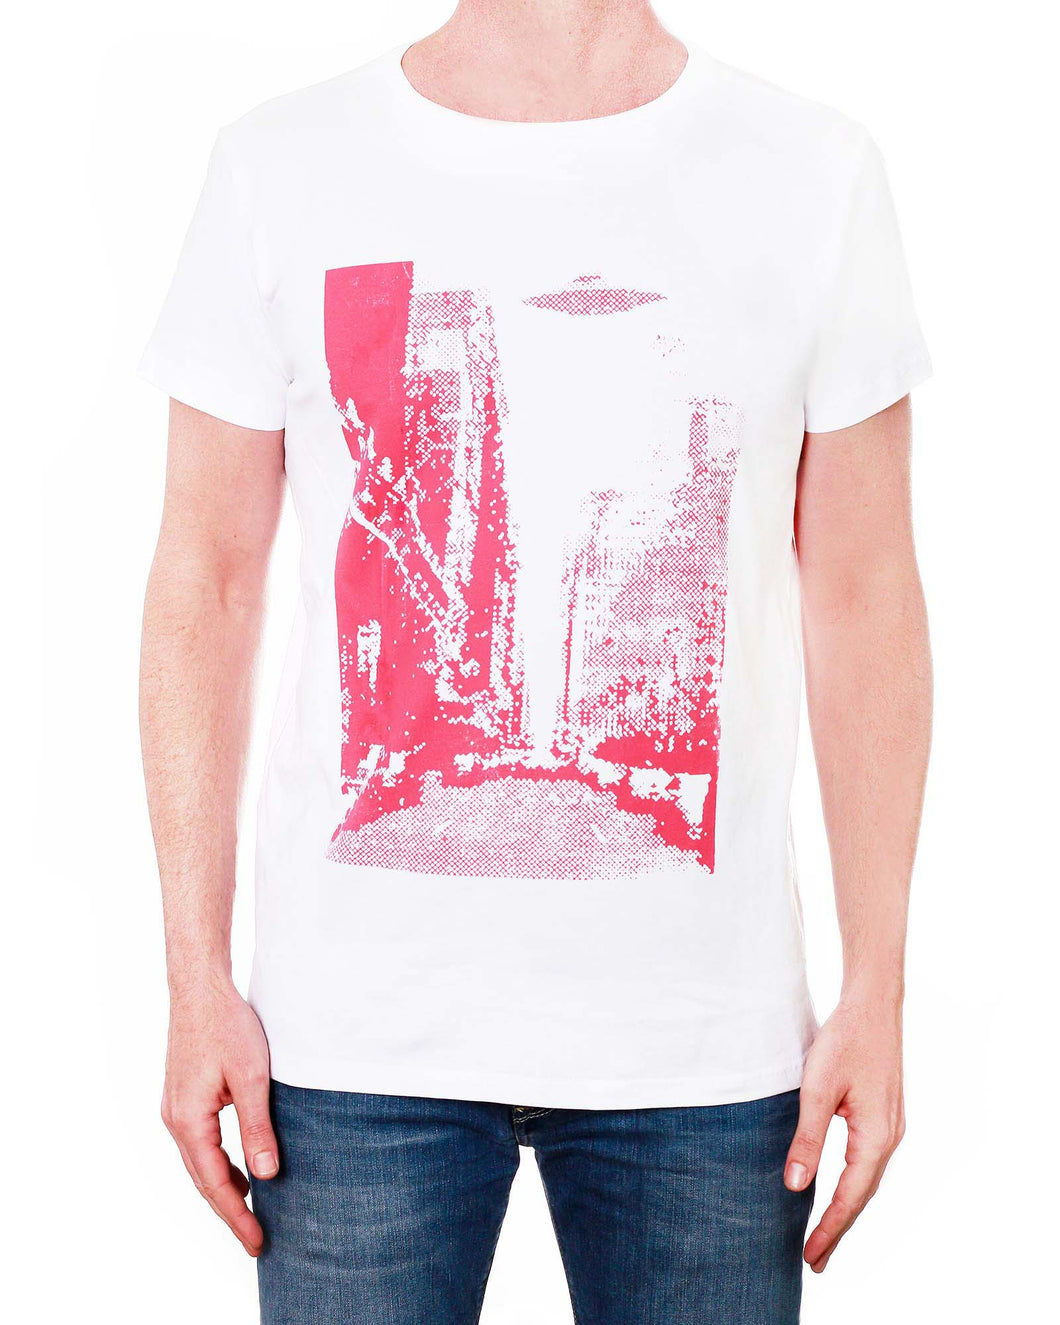 NY UFO Print (Pink)- Men's T-Shirt - Round Neck (White)